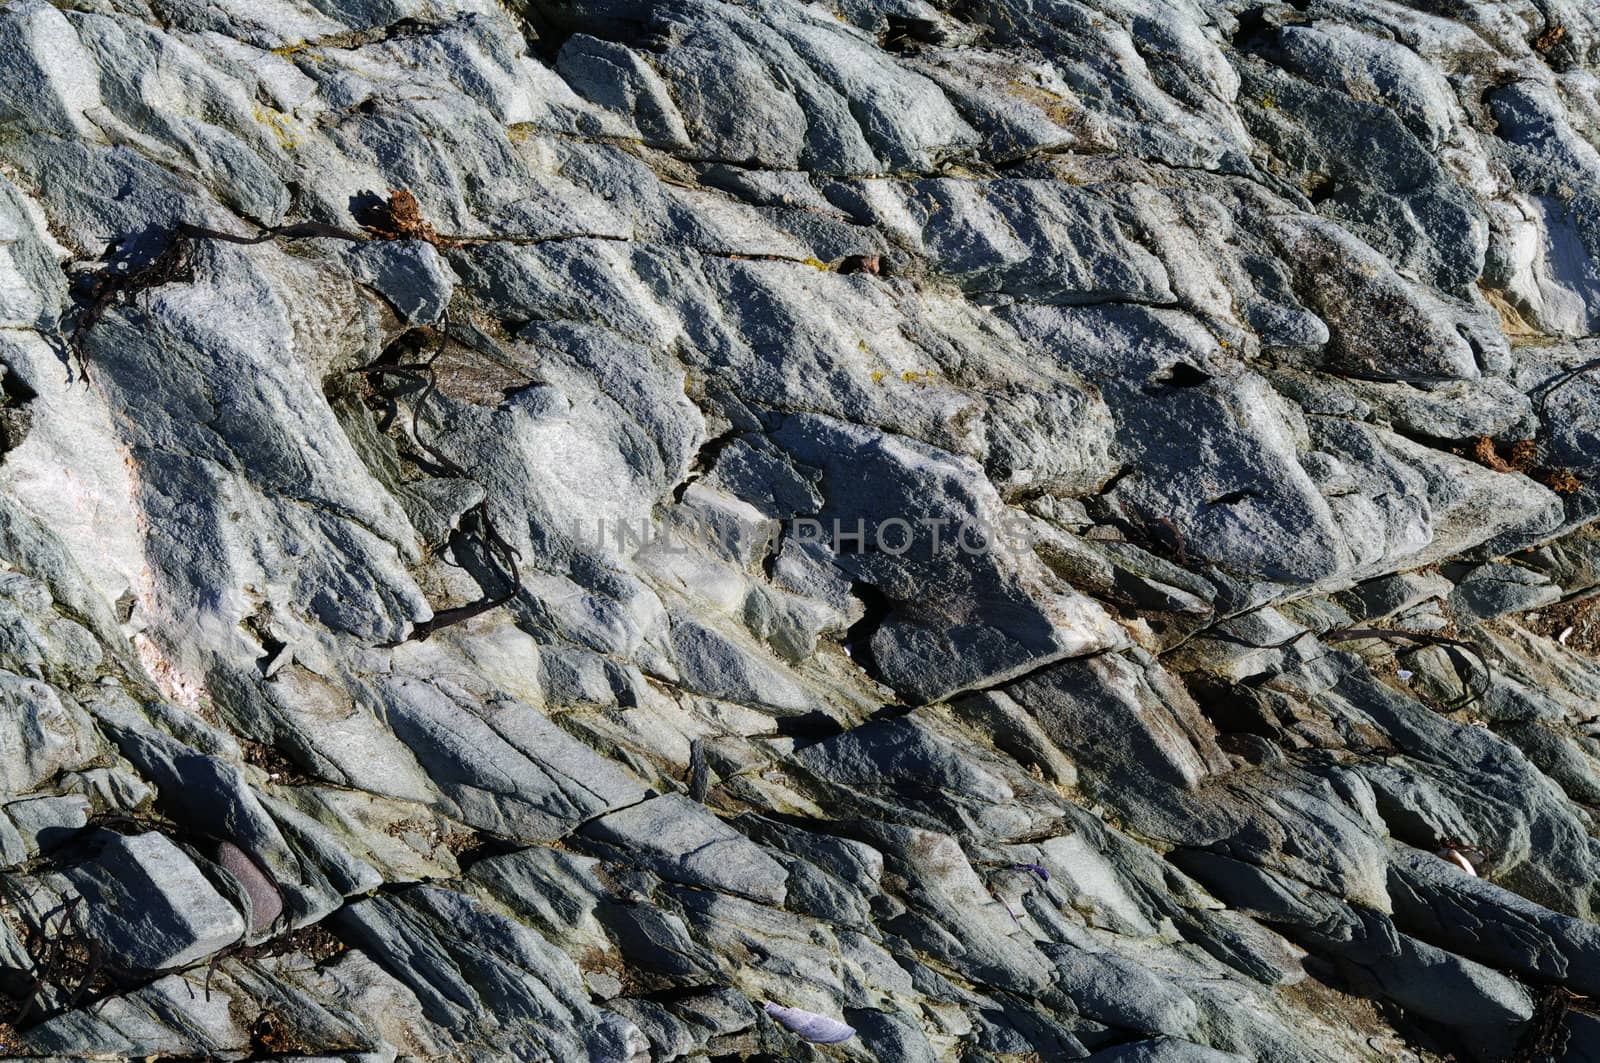 A background stone ledge